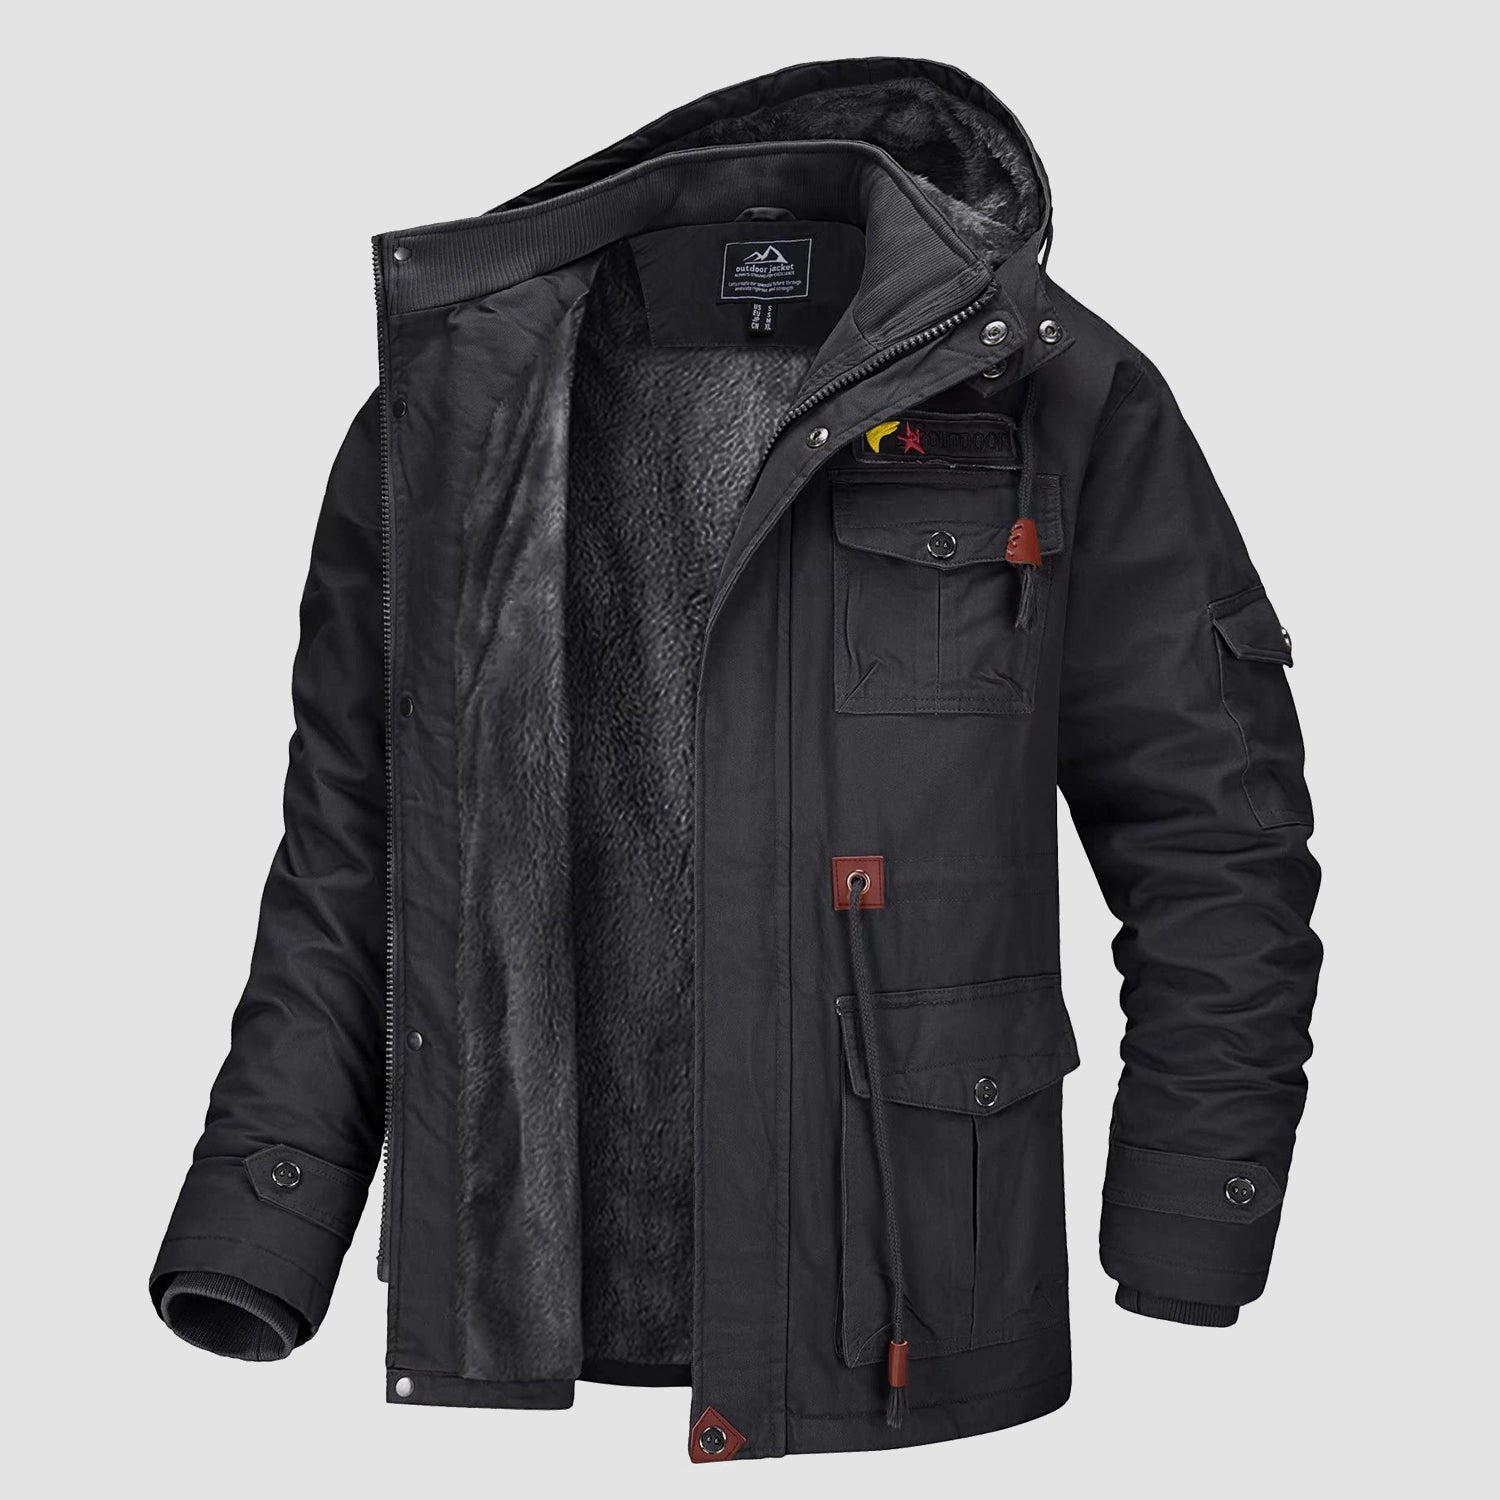 Men's Jacket Winter Cotton Military Trucker Cargo Jacket Fleece Lined Coats With Removable Hood